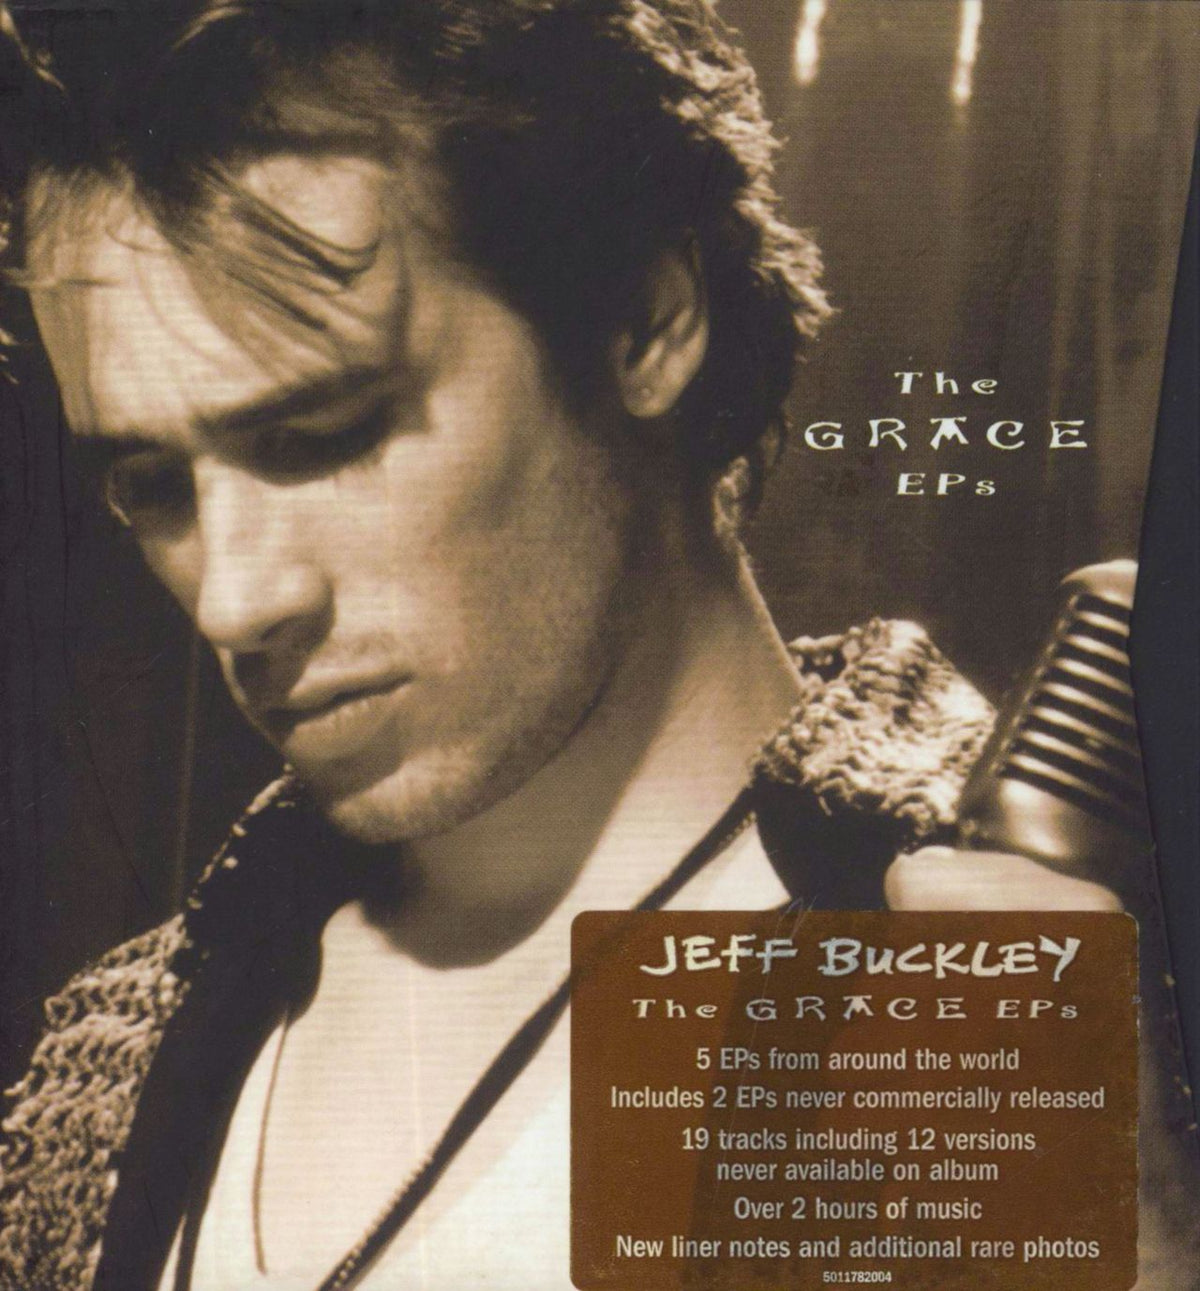 Jeff Buckley The Grace EPs UK Cd single boxset — RareVinyl.com